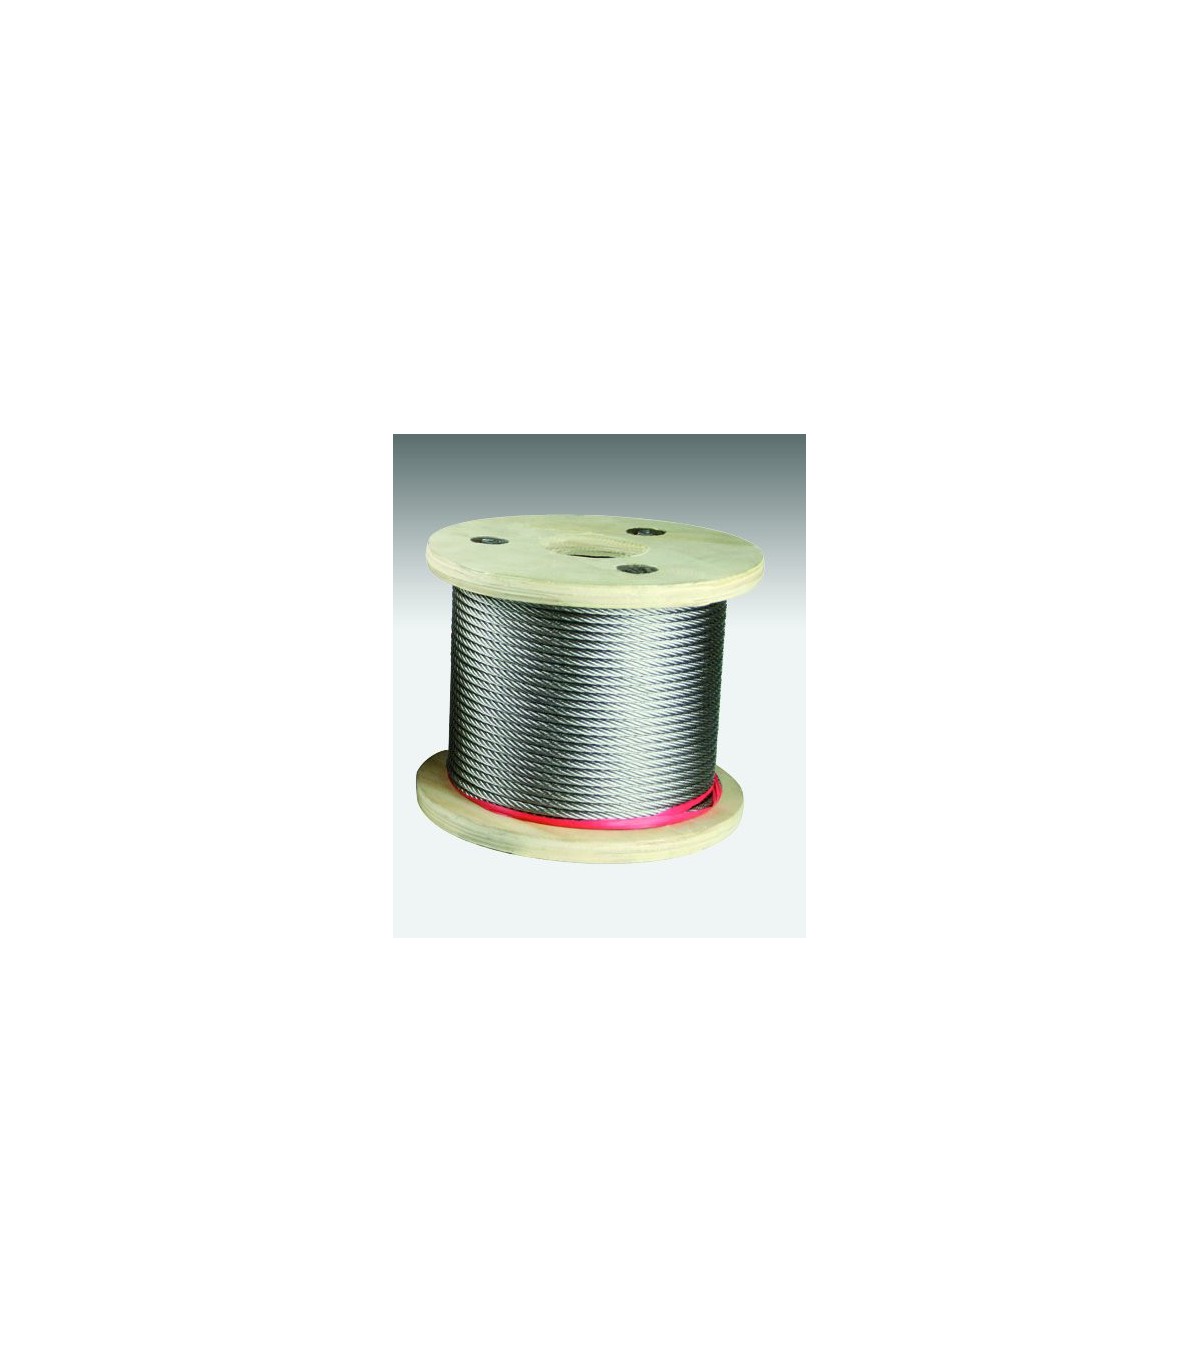 Câble souple en inox 316 gainé PVC blanc diamètre 6-9 mm vendu en couronne